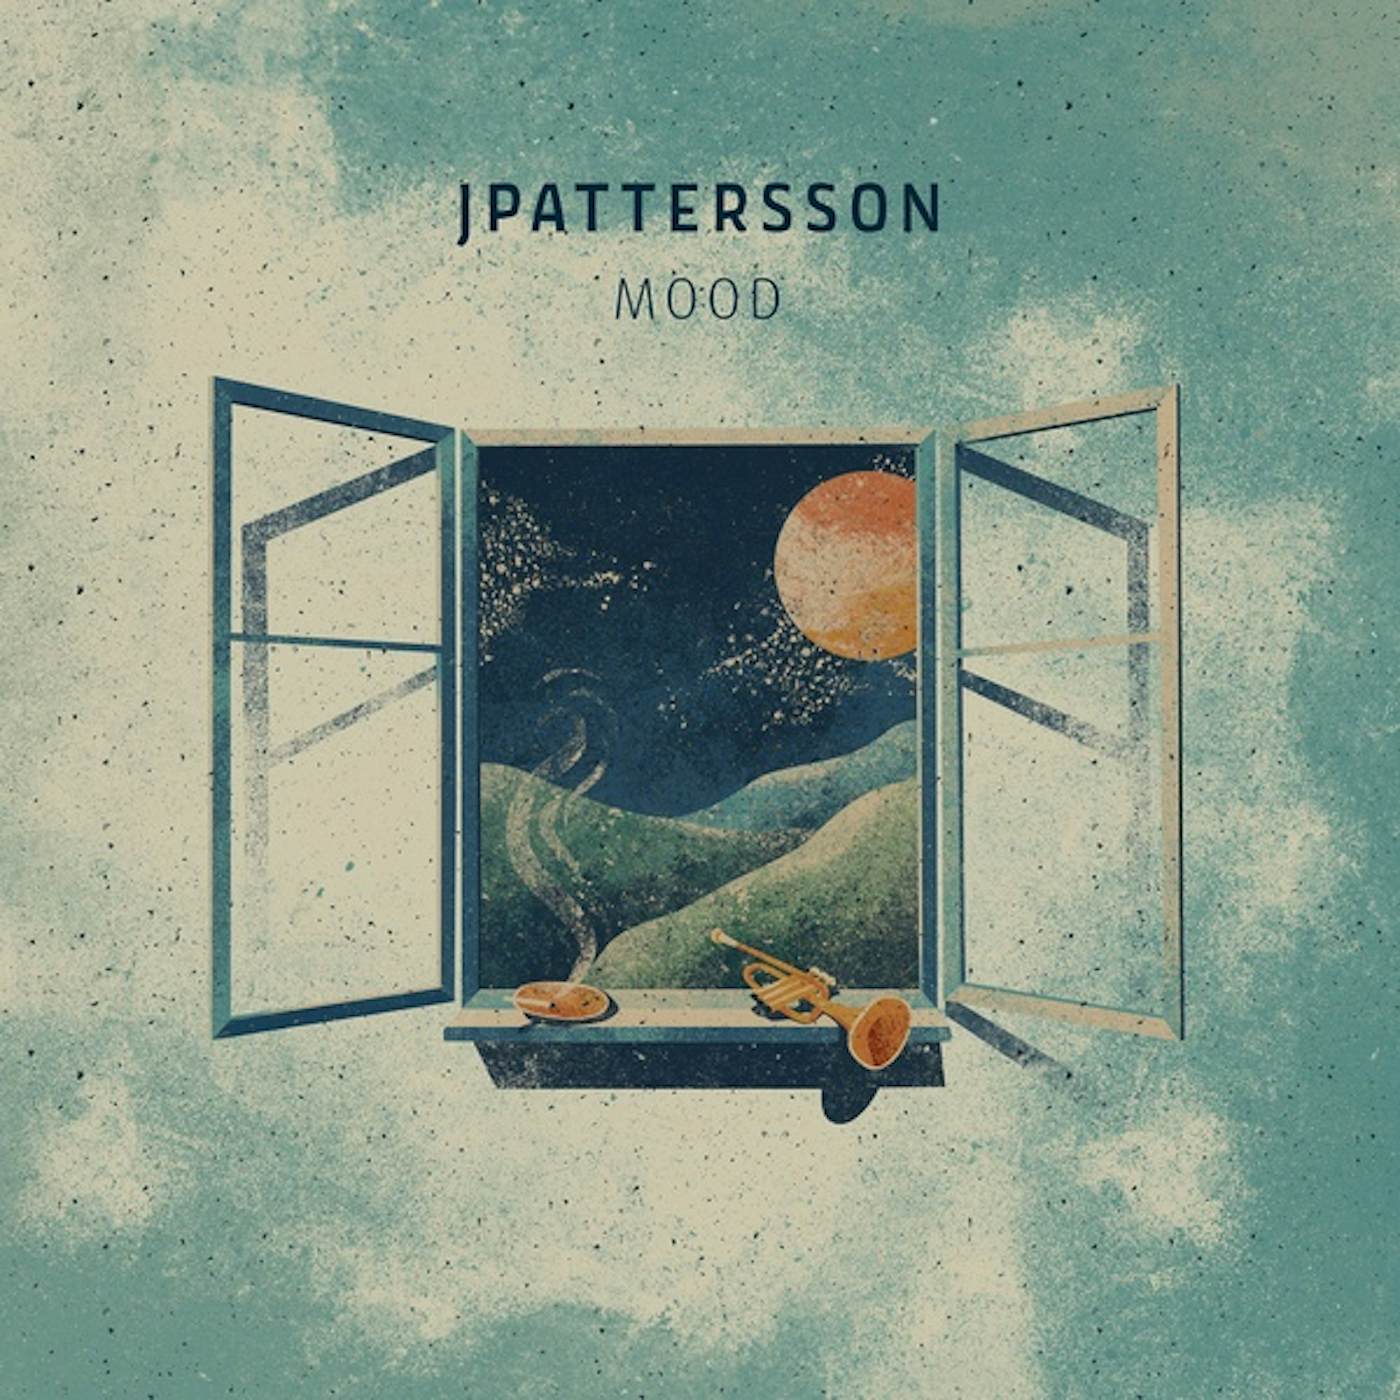 JPattersson Mood Vinyl Record